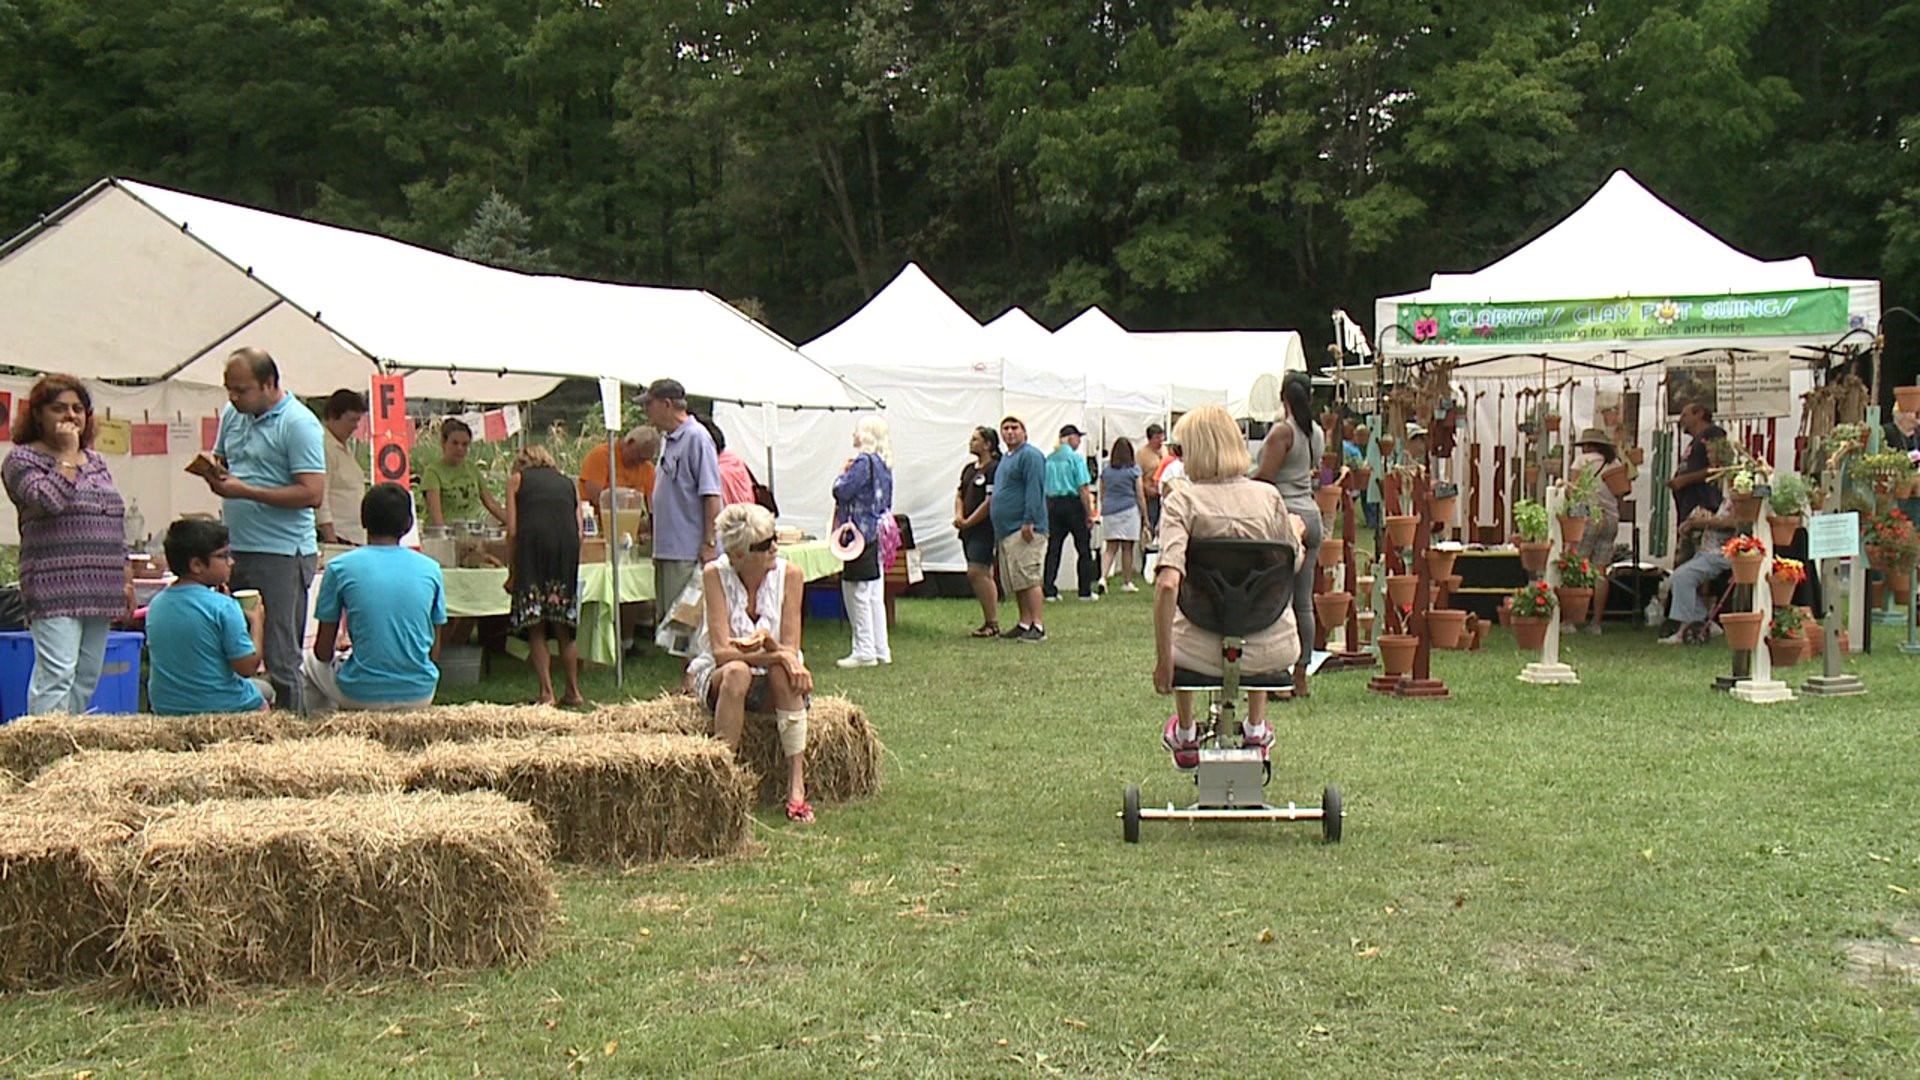 Annual Craft Festival Held in the Poconos